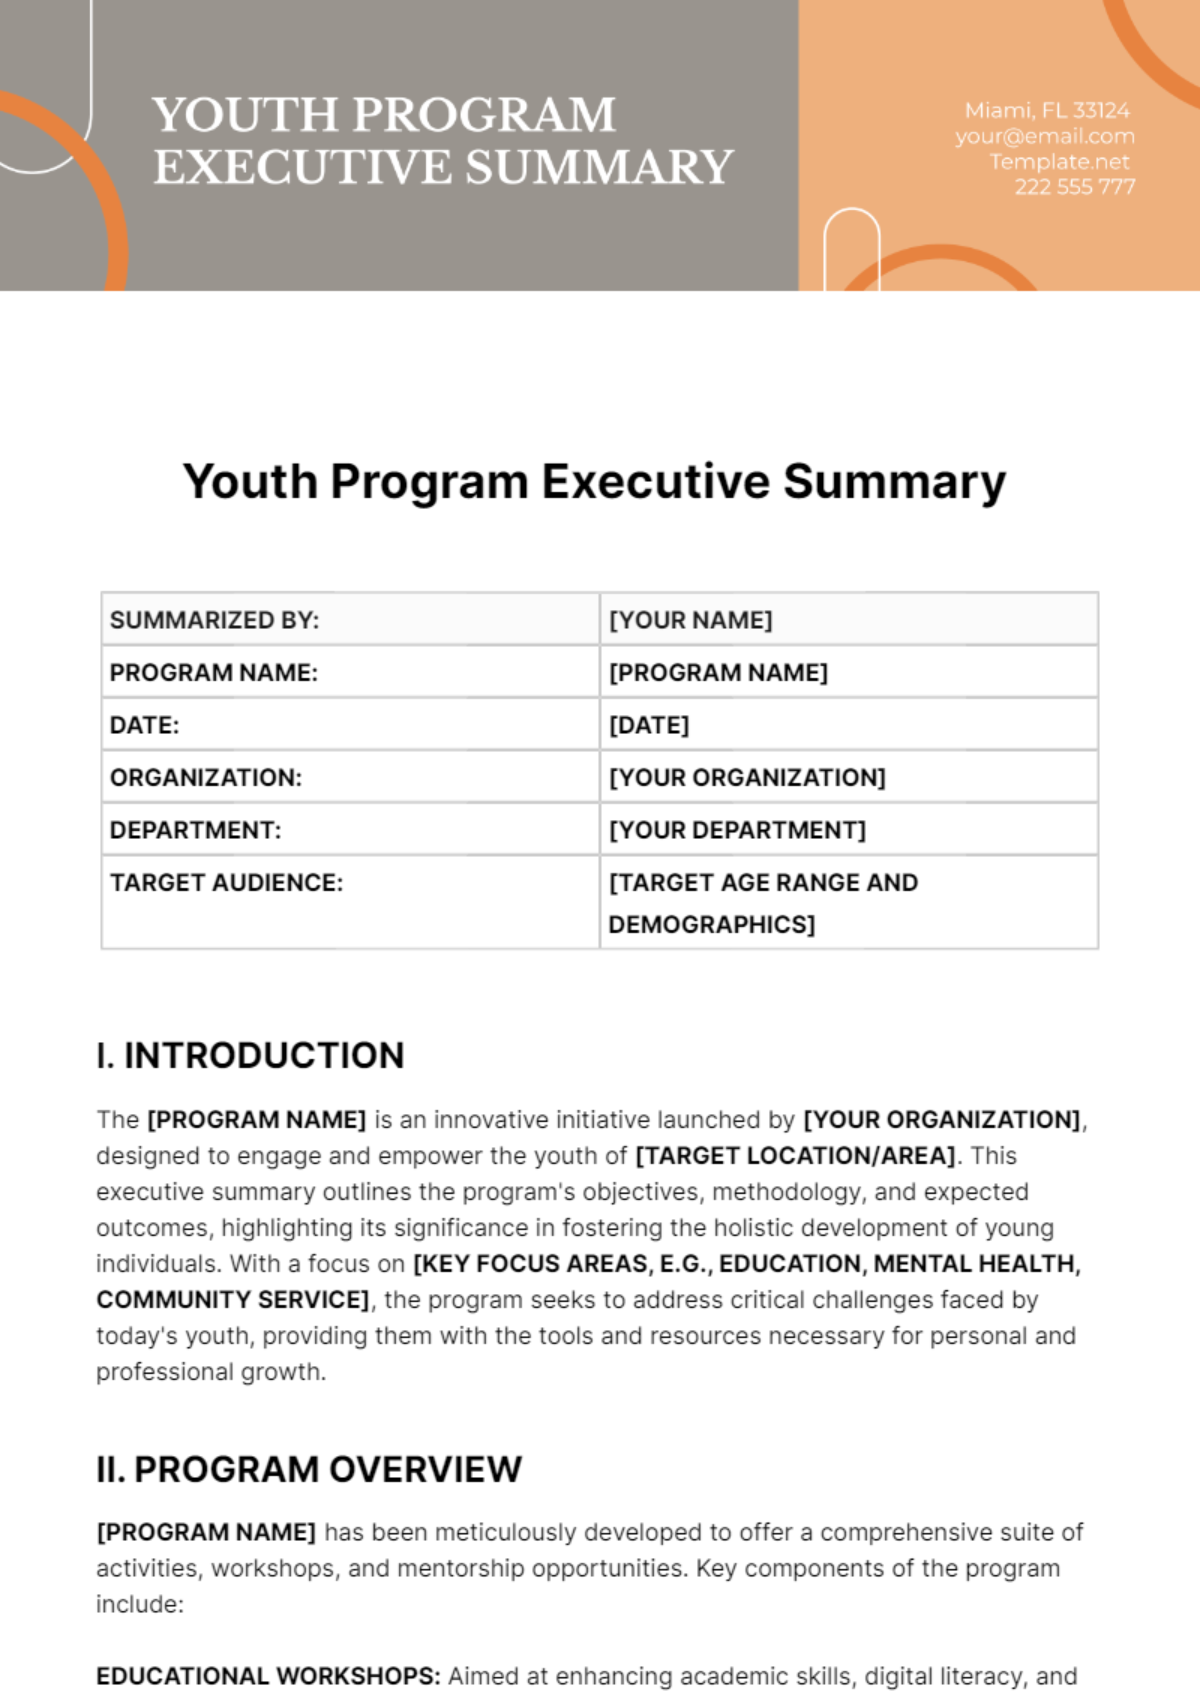 Youth Program Executive Summary Template